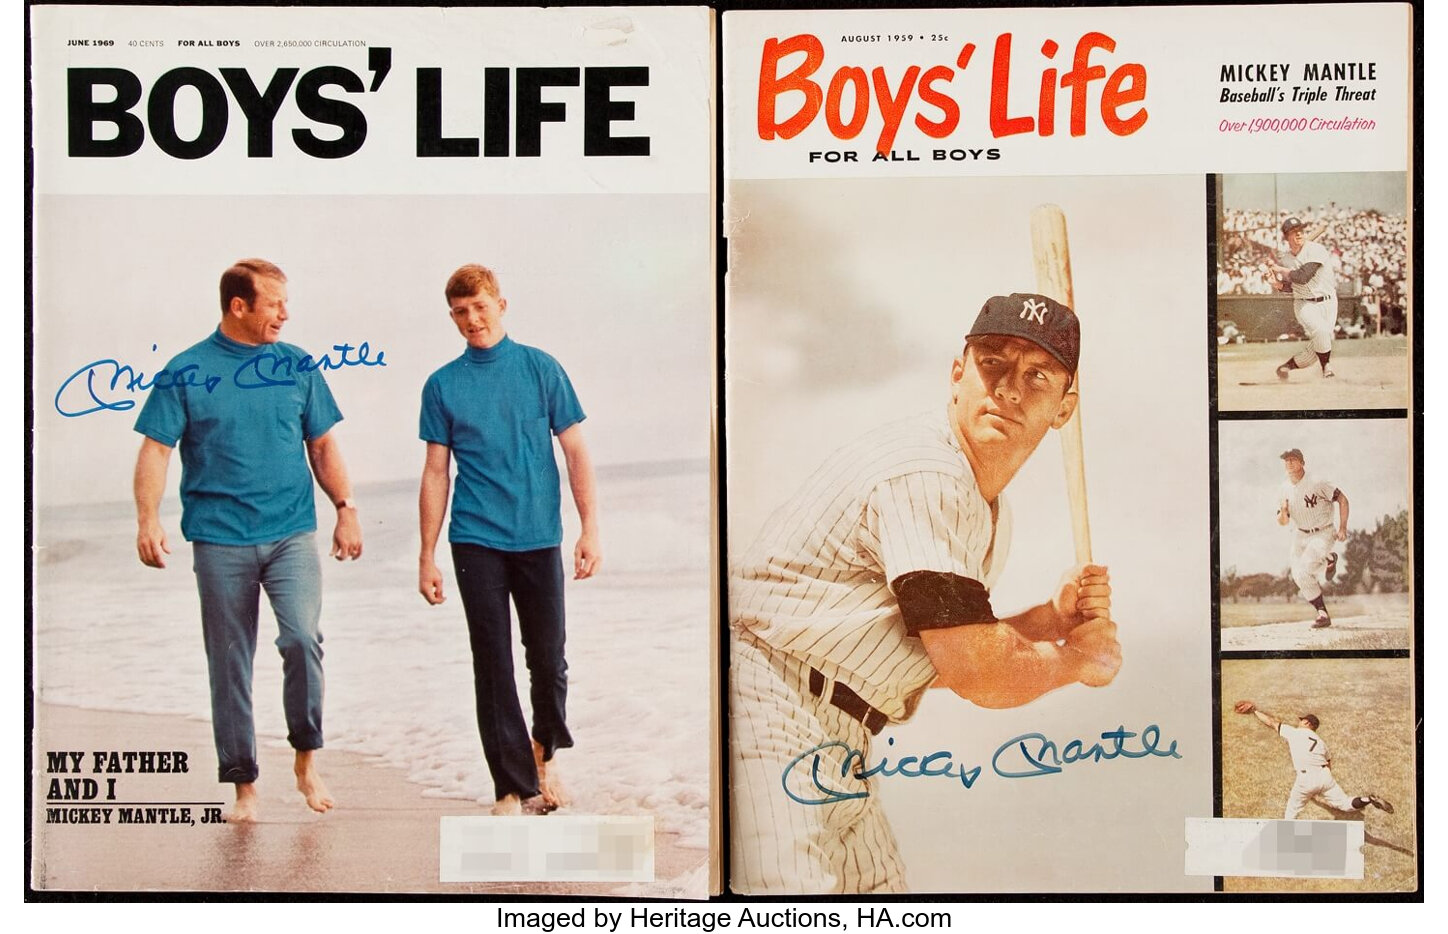 Mickey Mantle Signed Boy's Life Magazine Cover 1969. Auto PSA